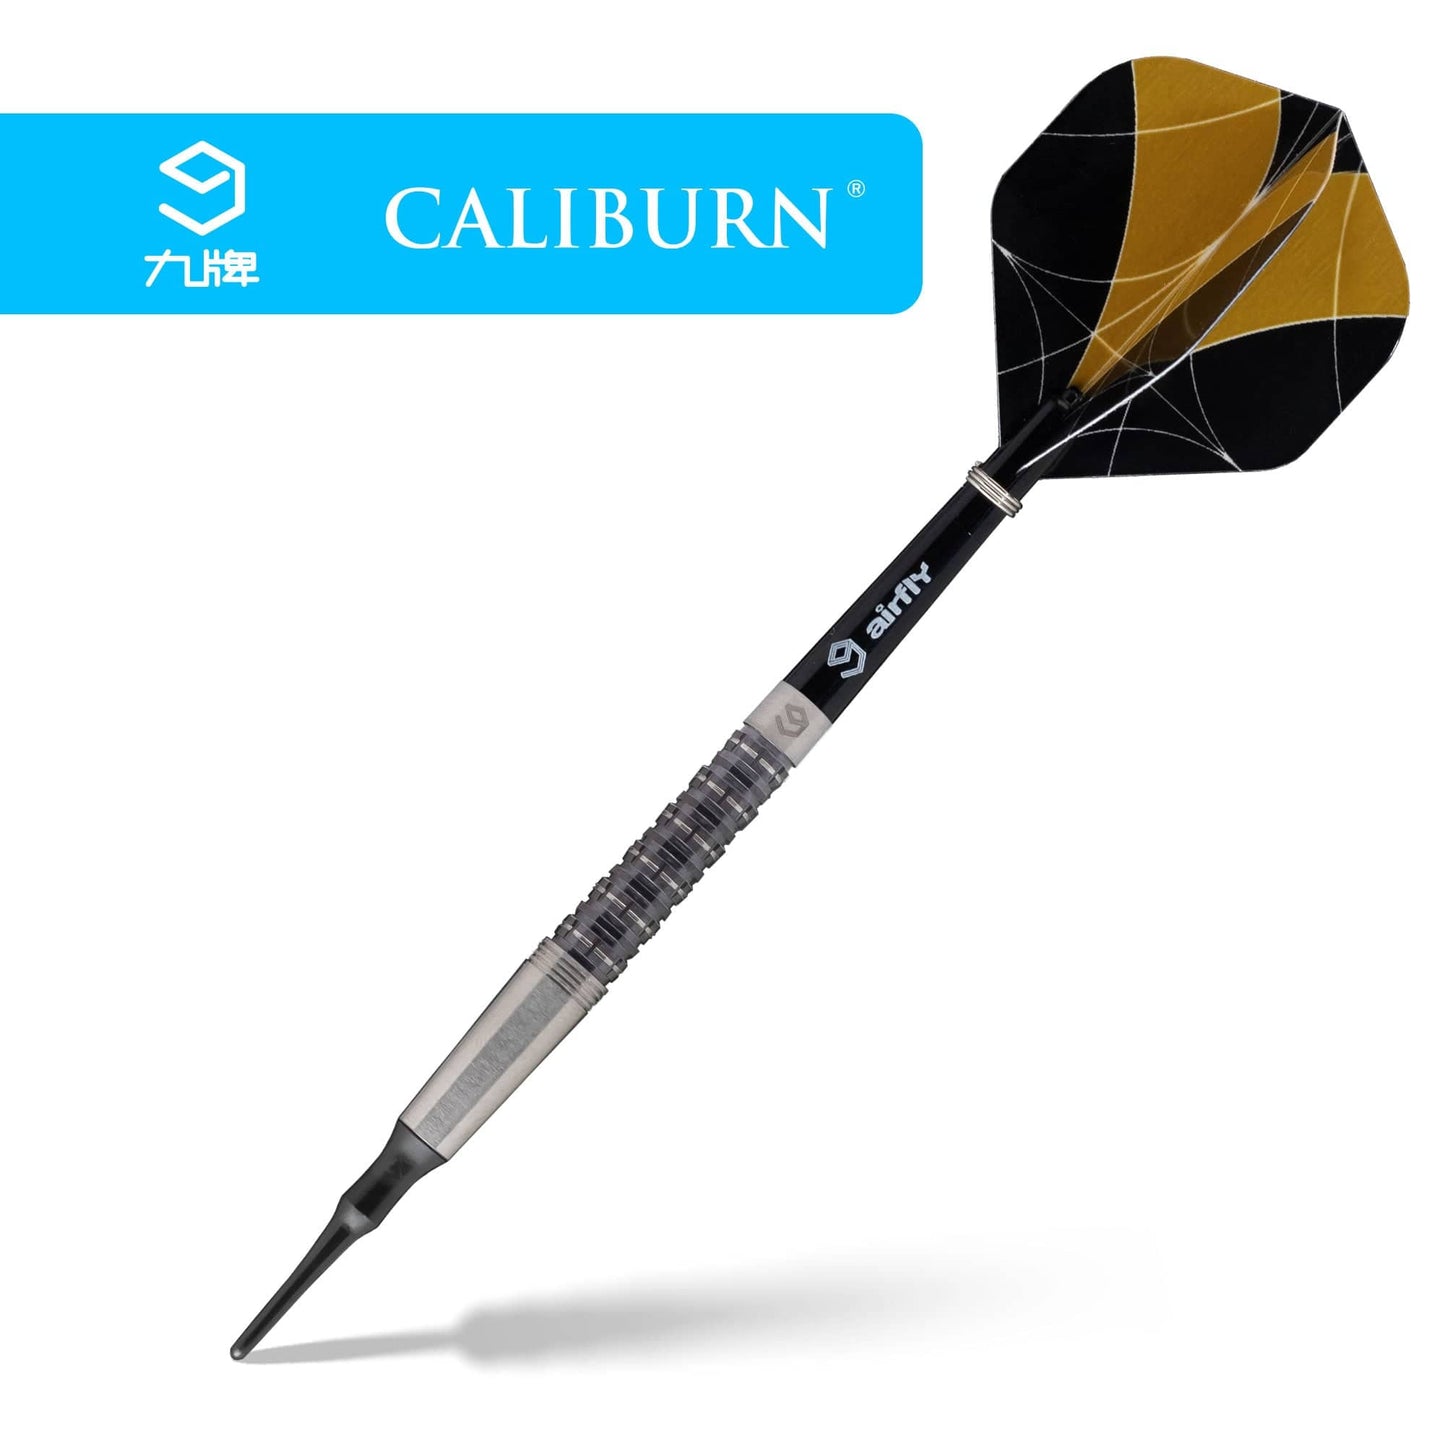 Caliburn Nights Watch Darts - Soft Tip - 95% - N2 - Black